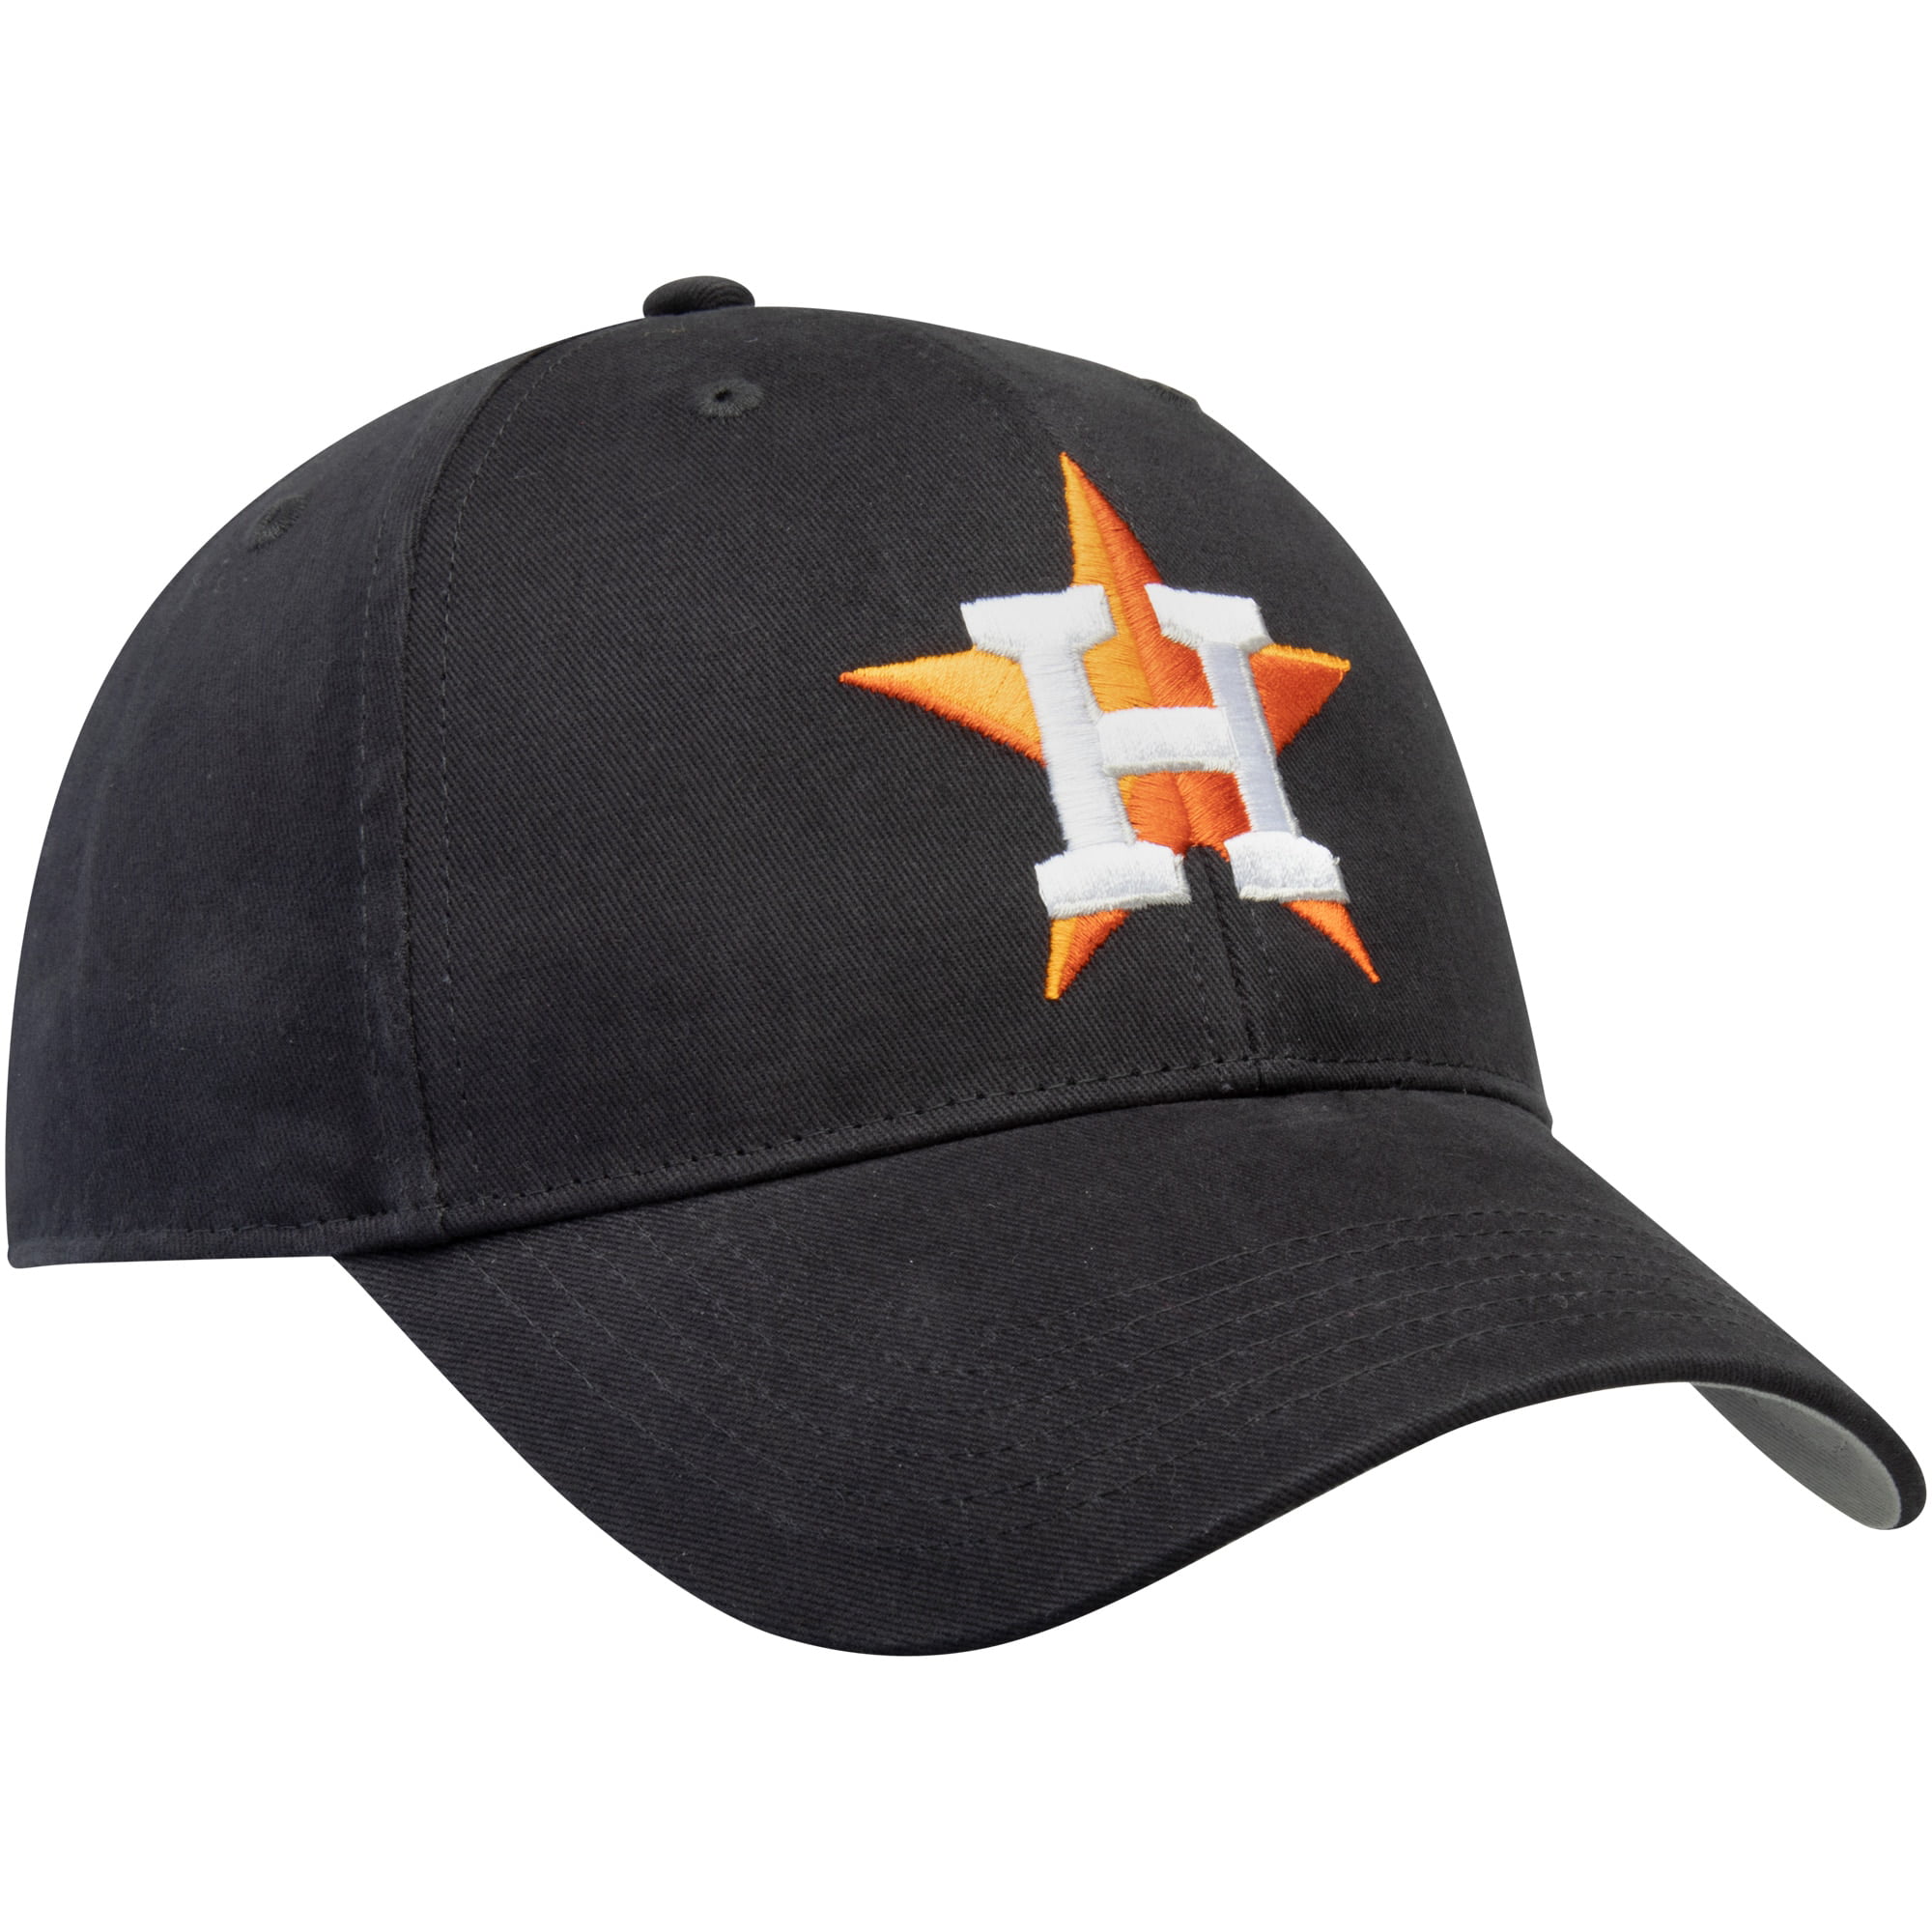 Fan Favorite Houston Astros '47 Basic Adjustable Hat - Navy - OSFA 